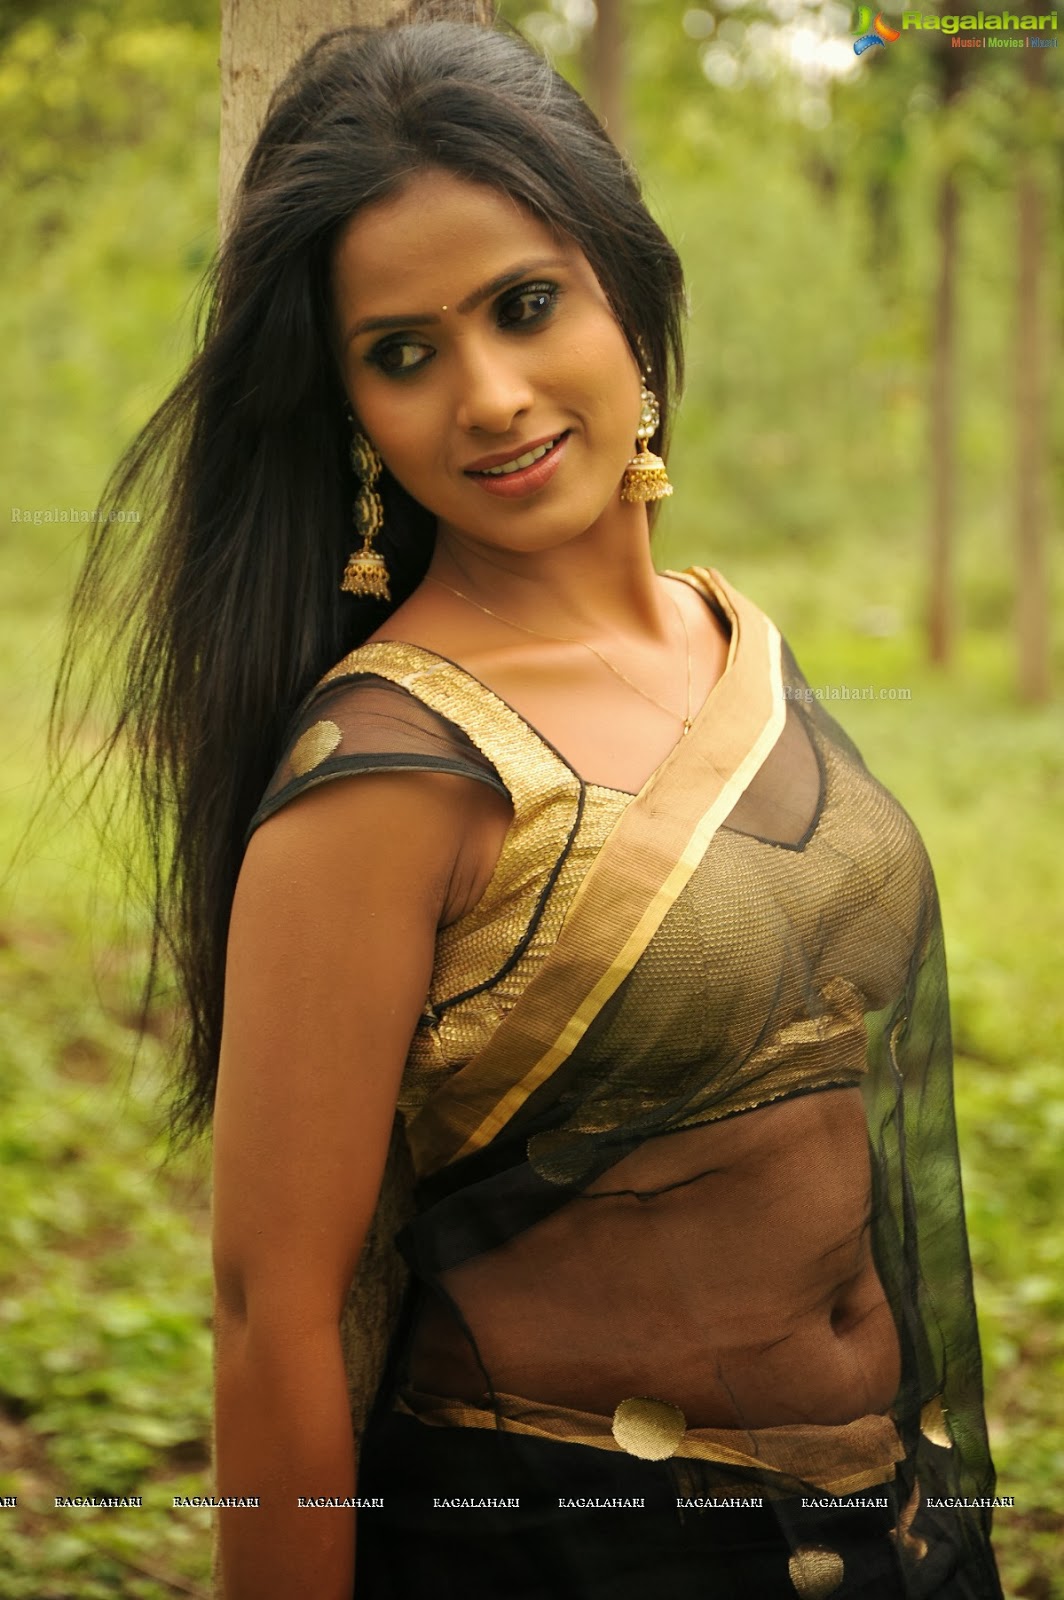 Beauty Of Actress Tv Anchor Prashanthi Hot Photos Shows Deep Navel And Armpits